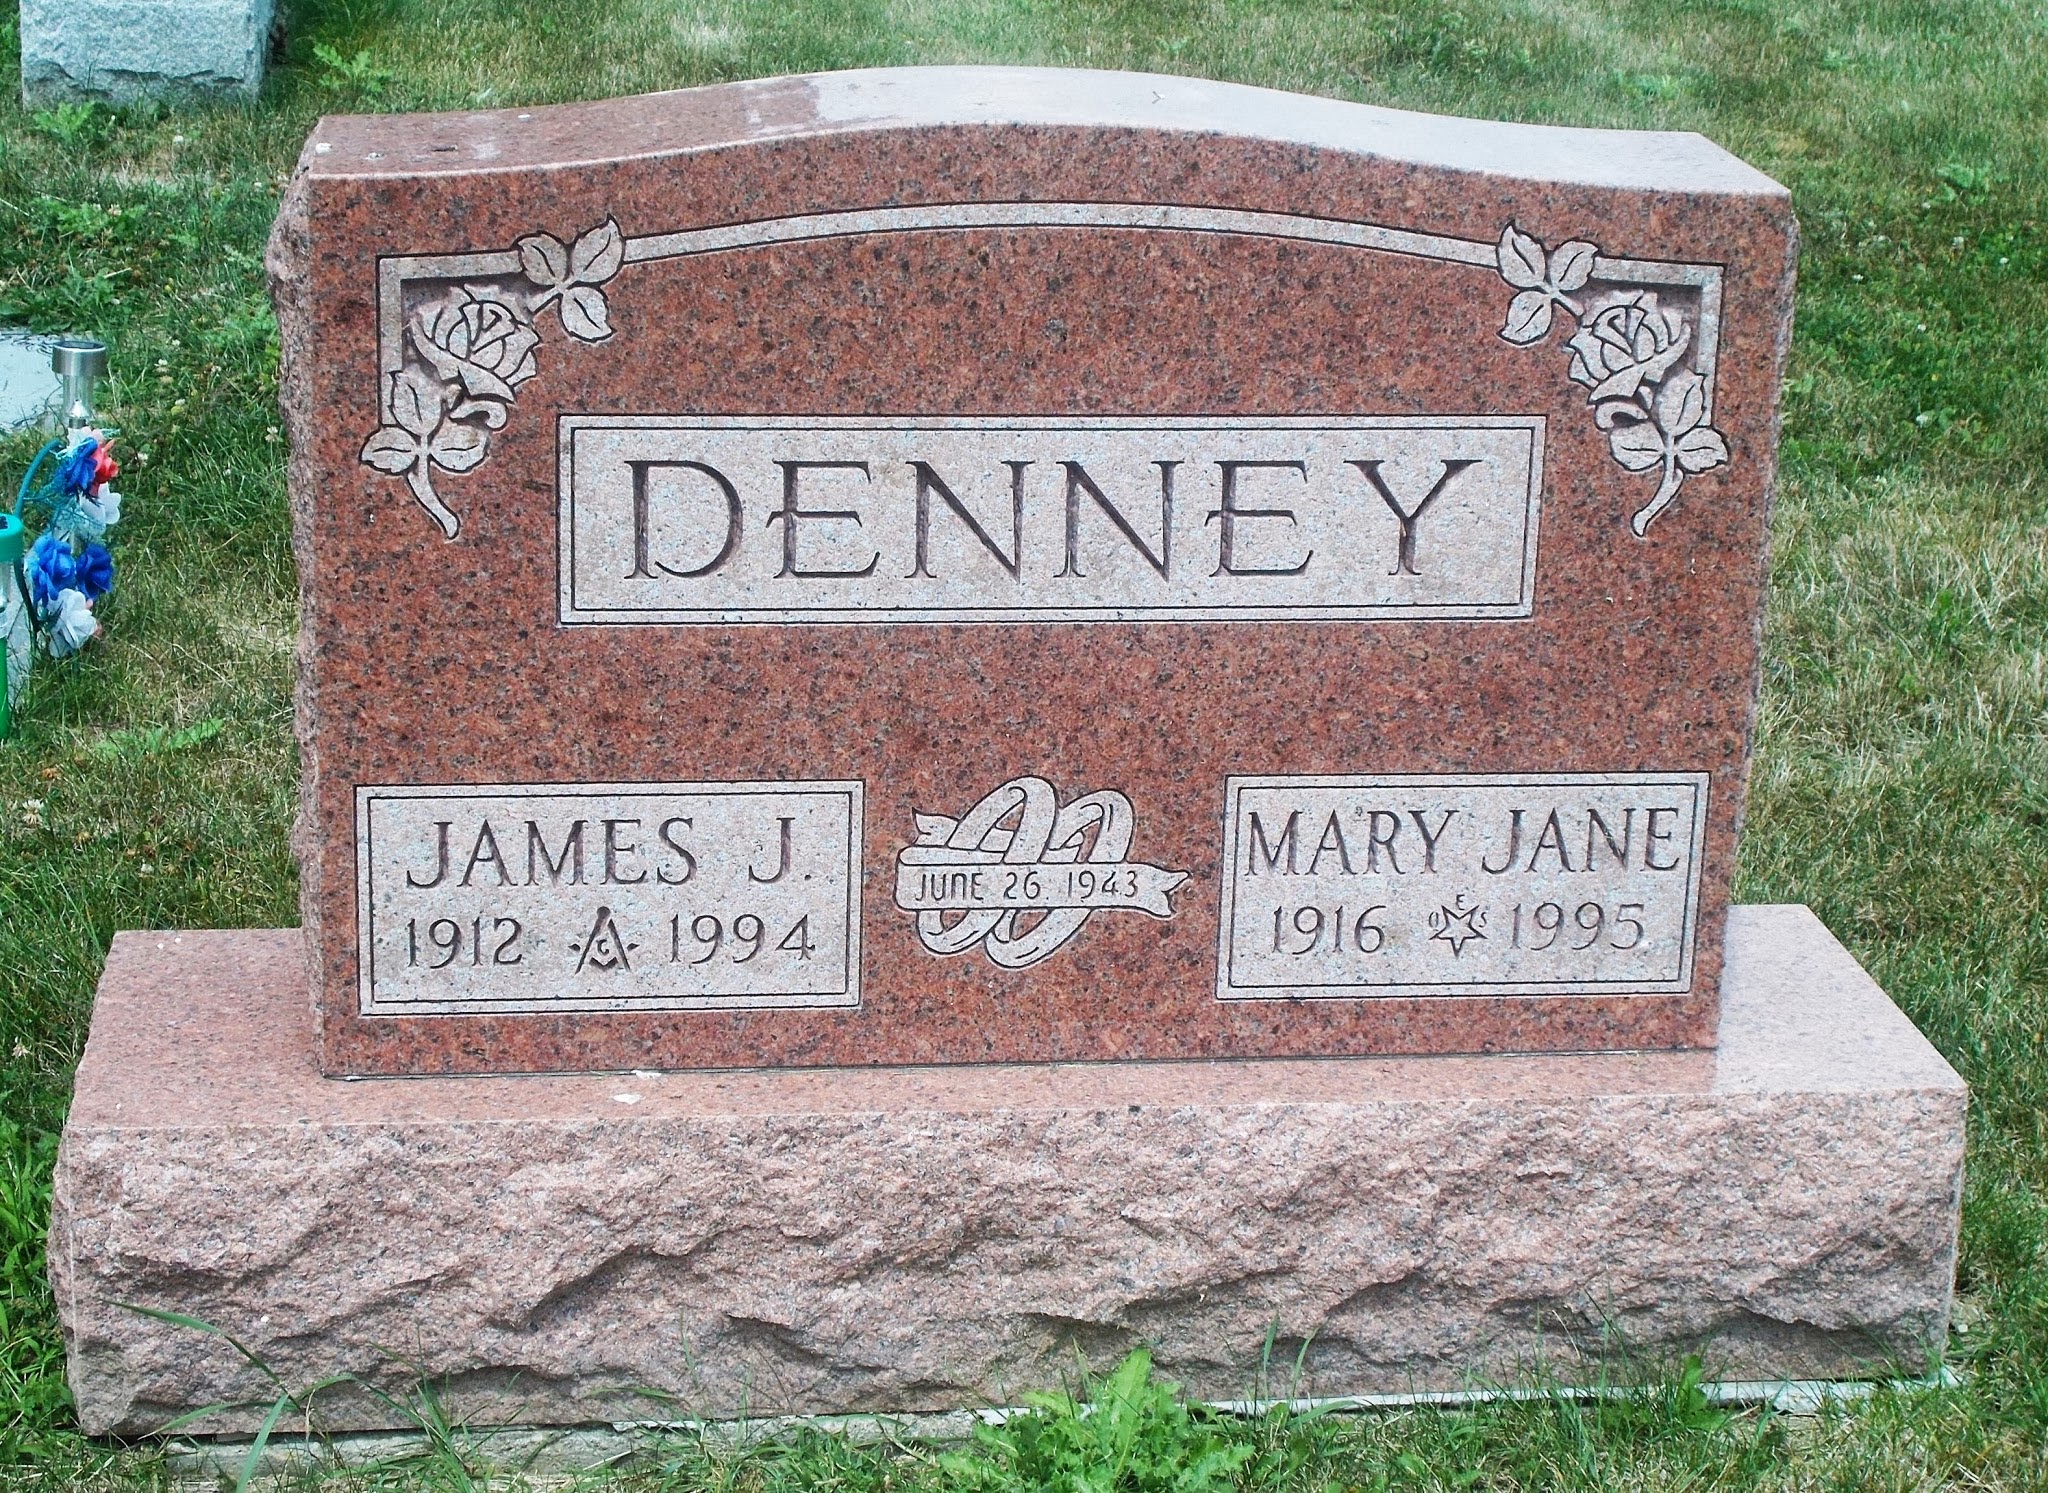 Mary Jane Denney